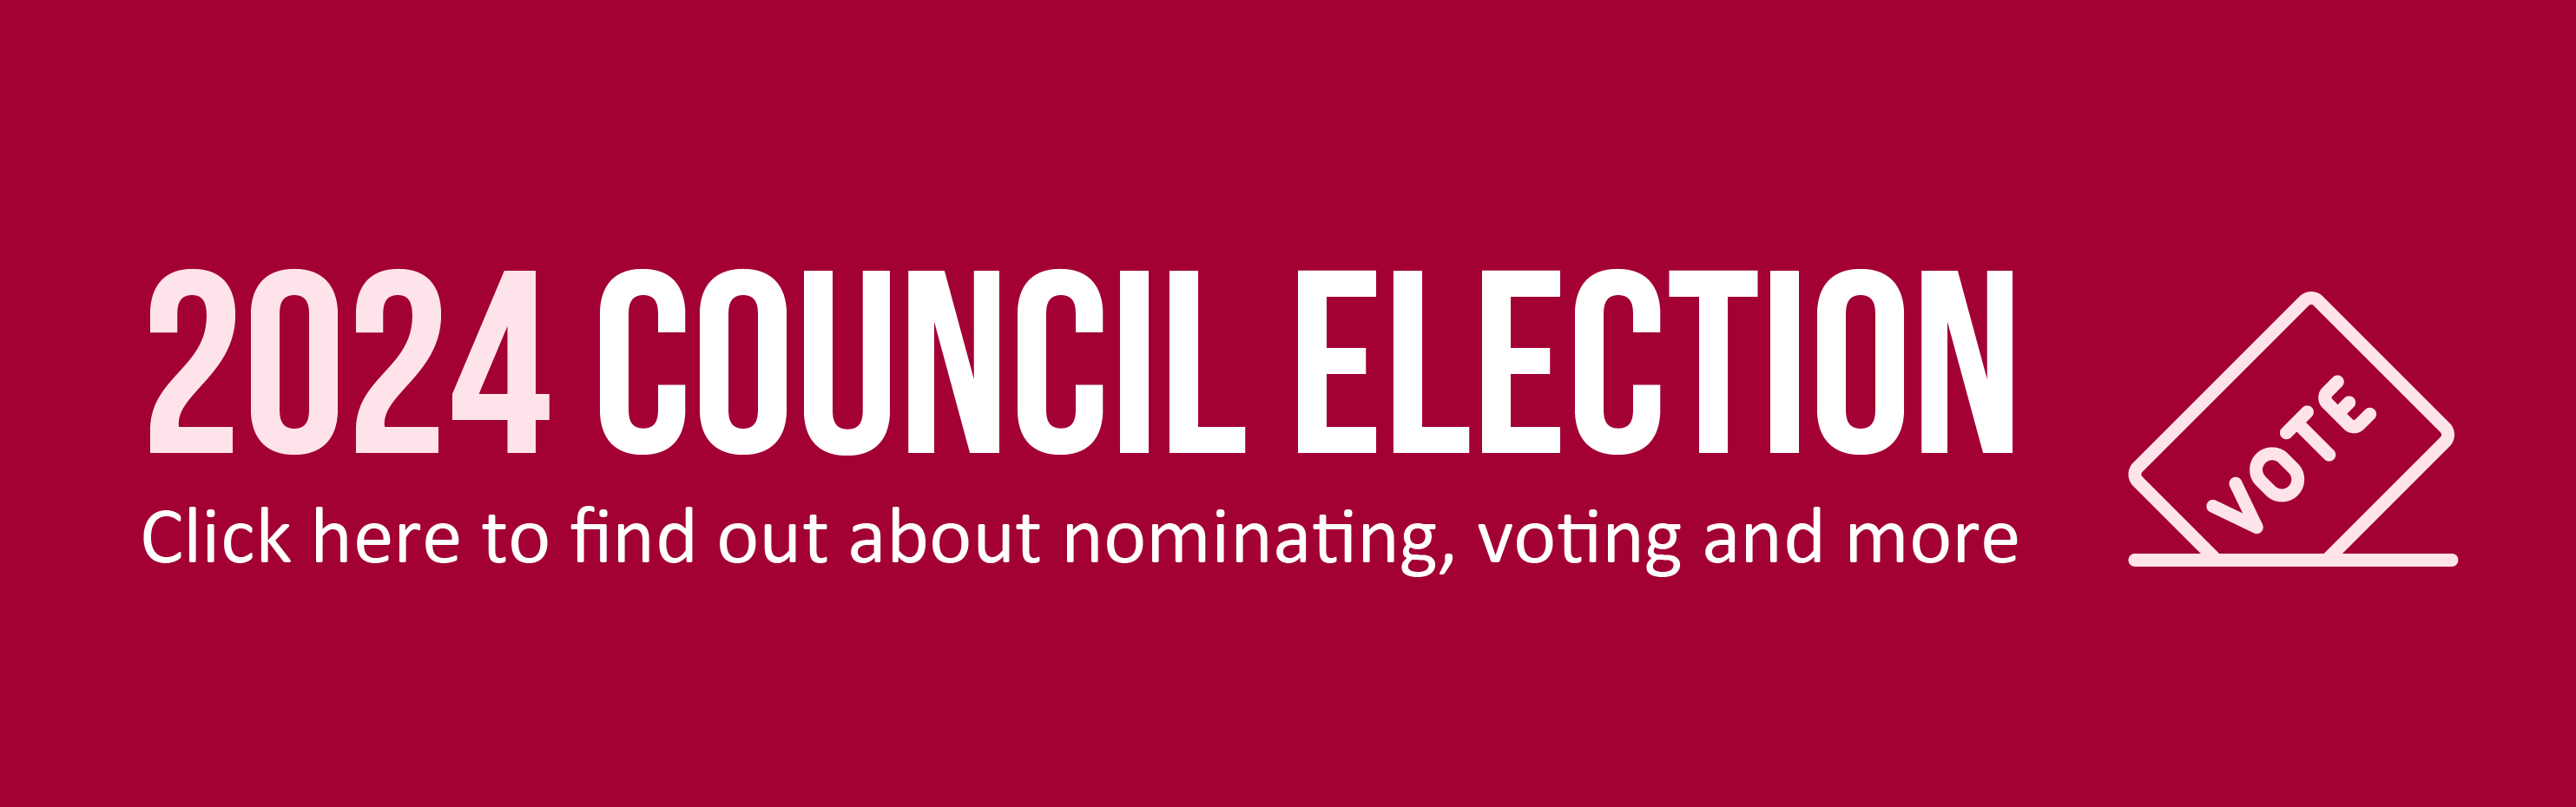 Council election web banner